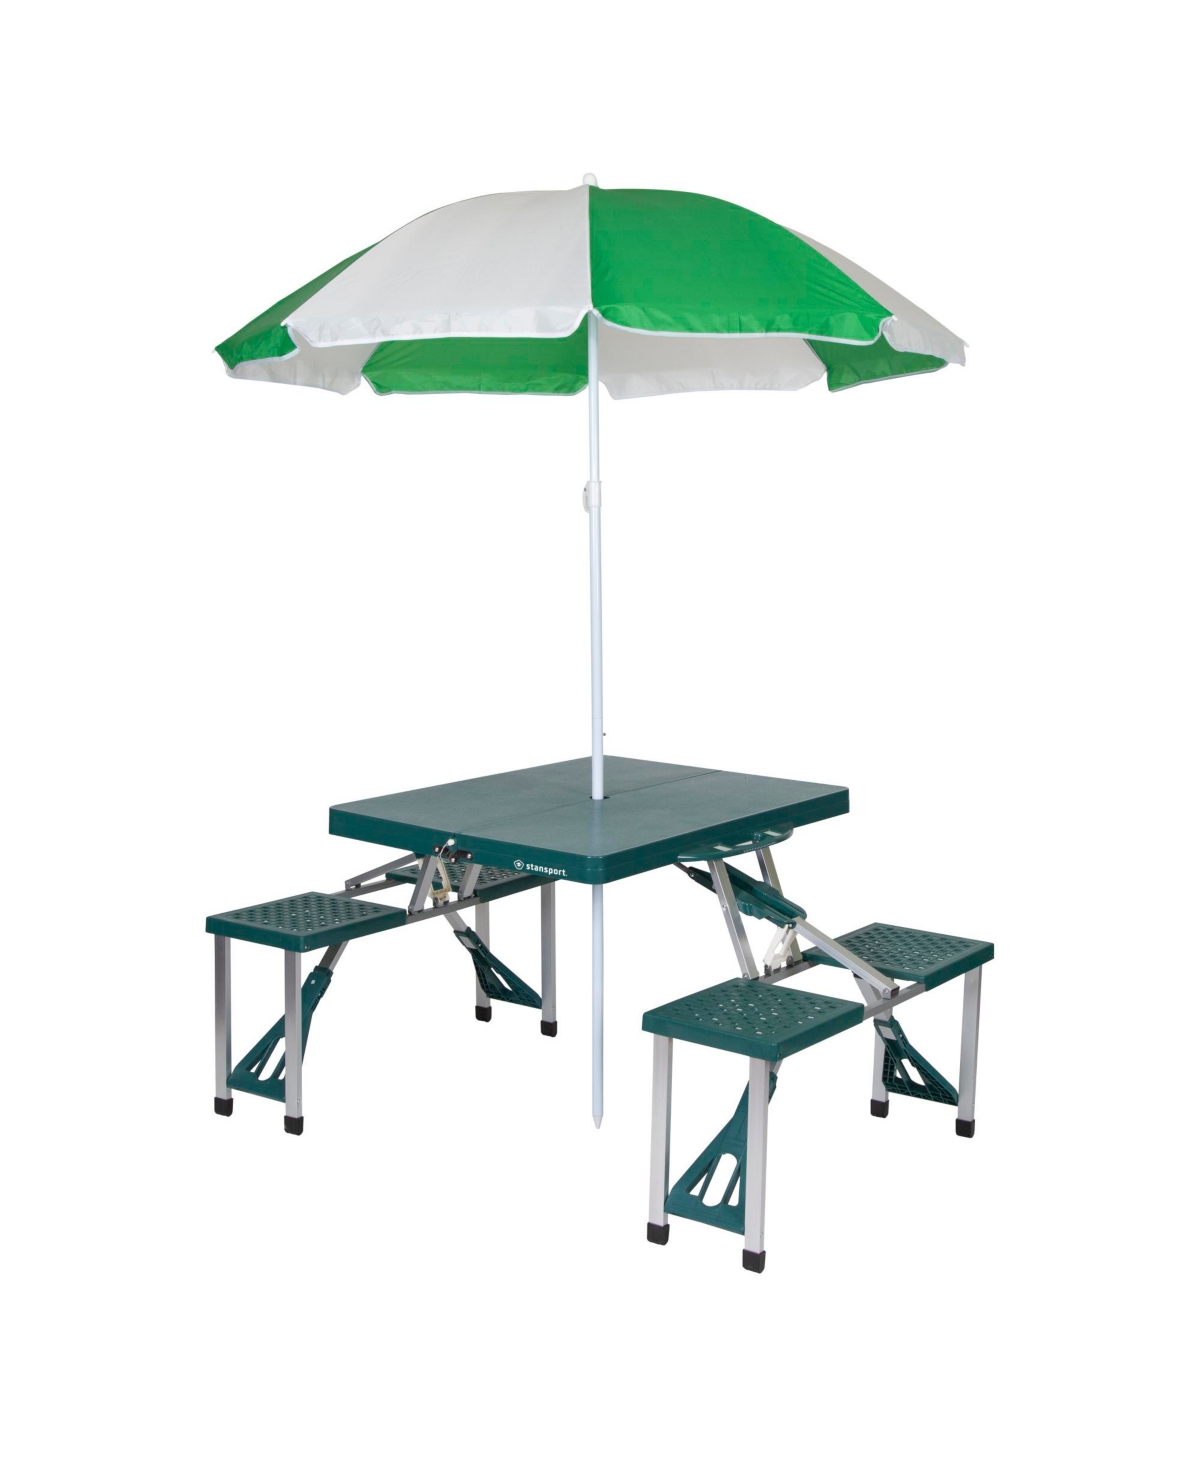 Stan sport Picnic Table and Umbrella Combo - Green - Green